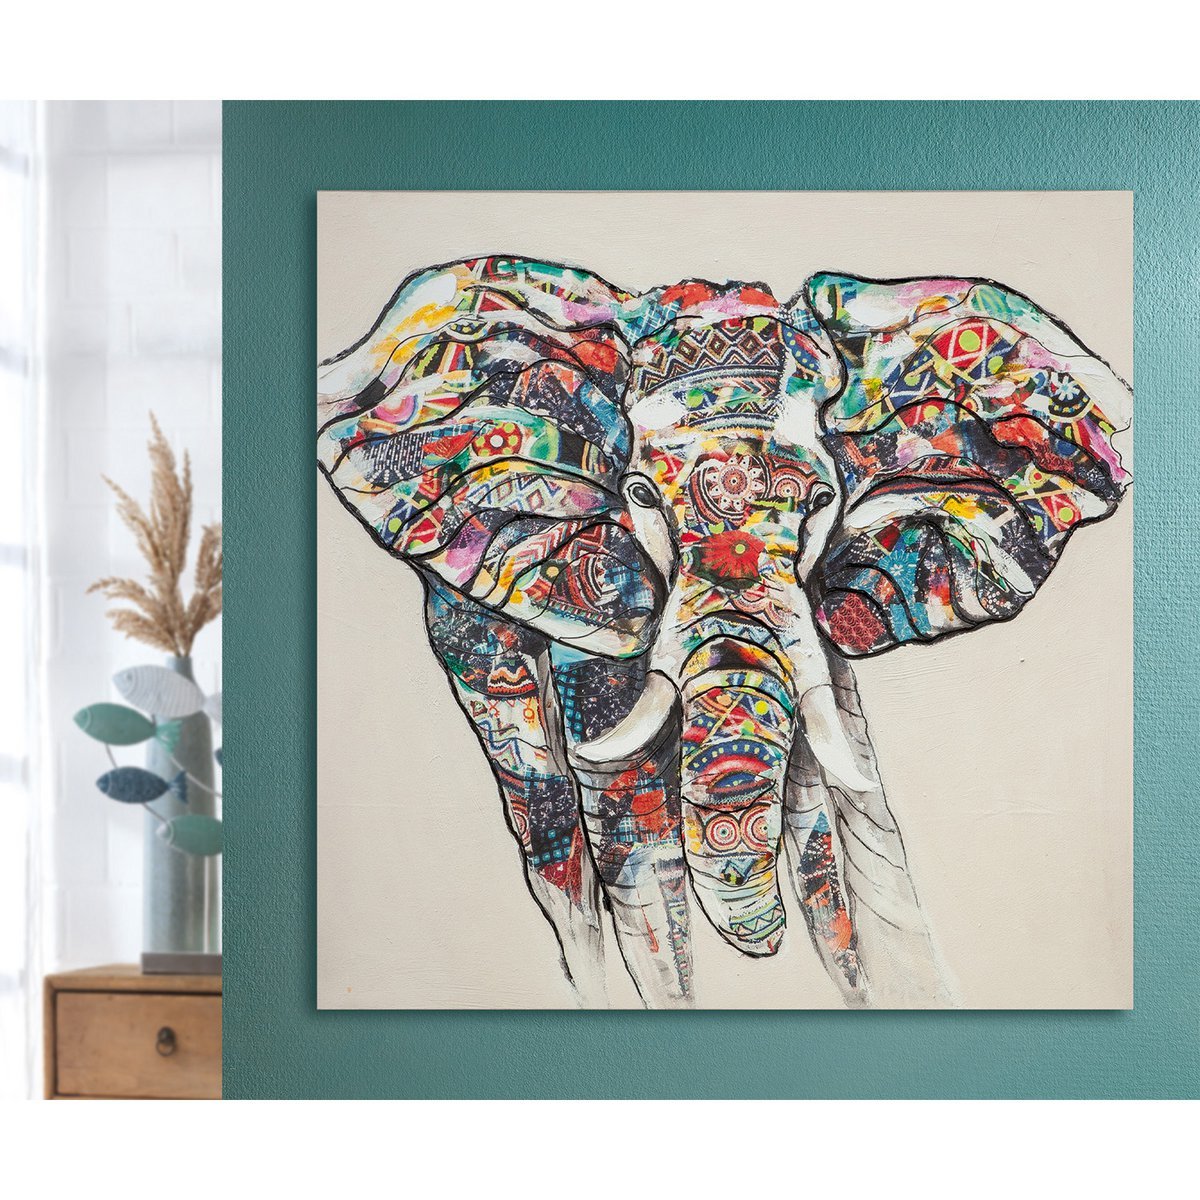 Holz/Leinen Bild "Bunter Elefant"